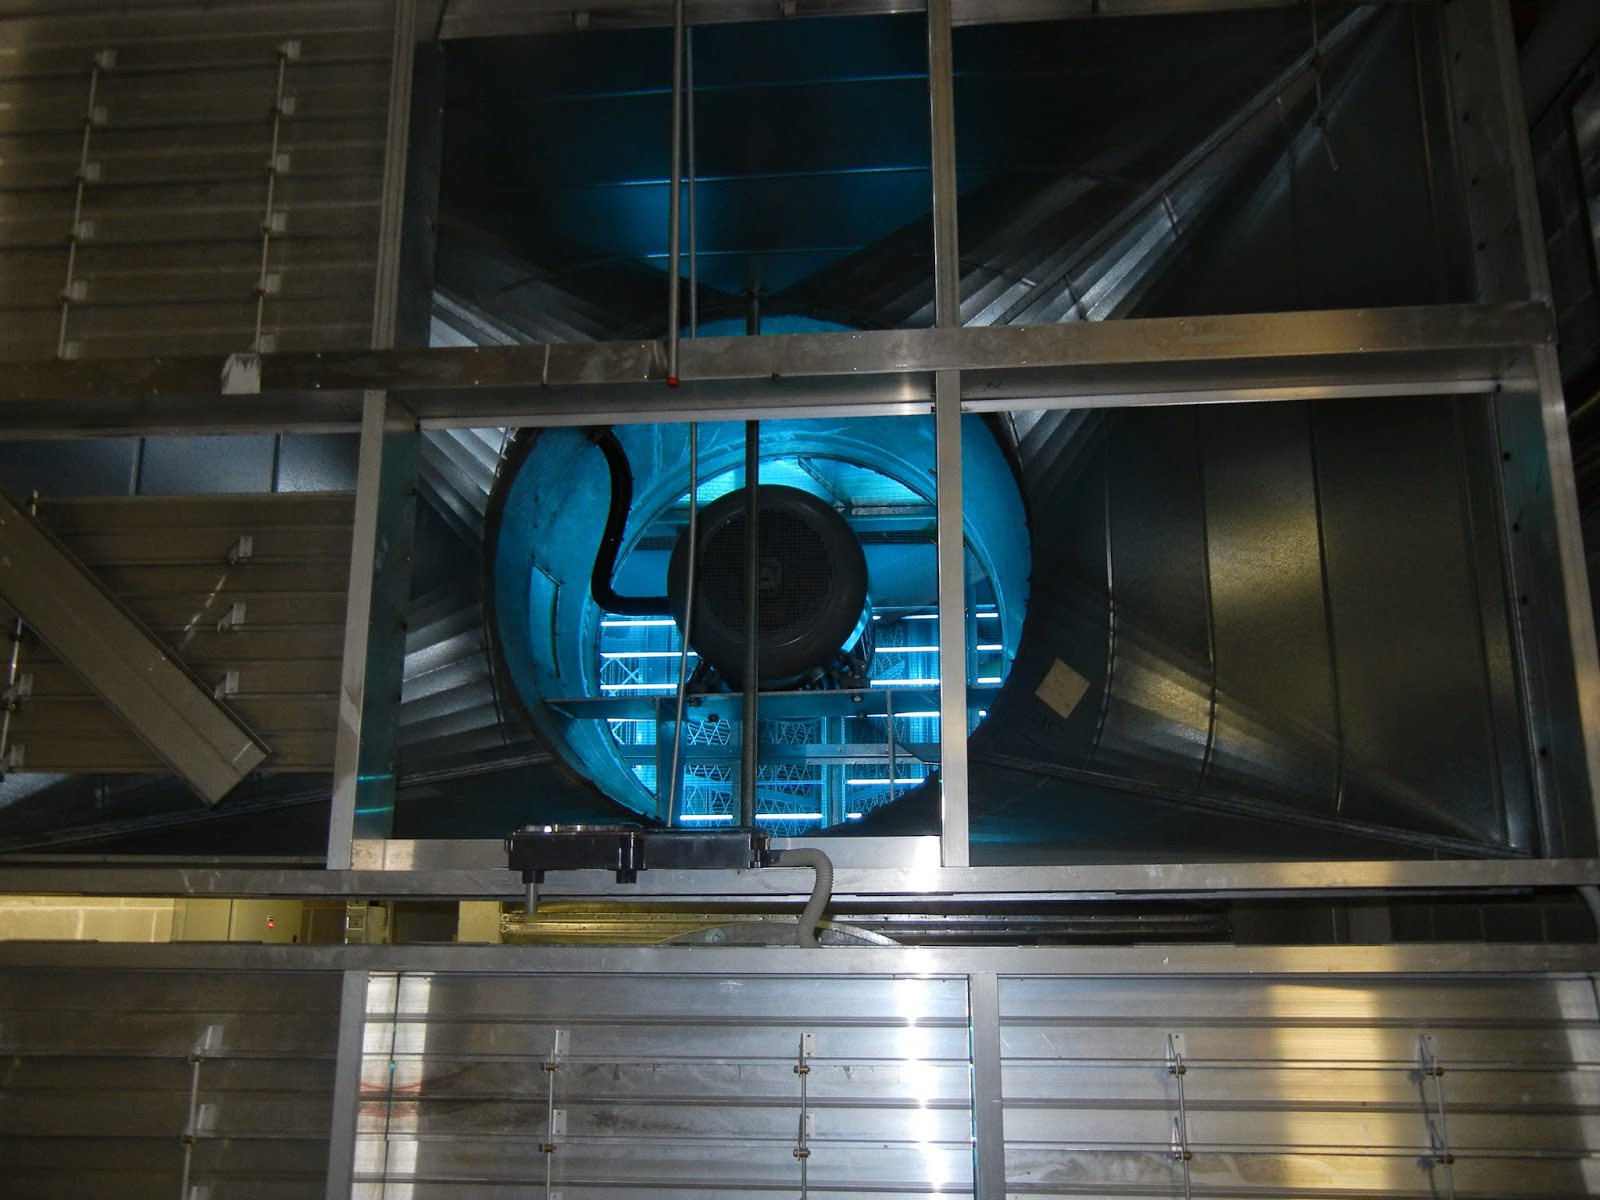 UV Lights for HVAC Systems, HVAC Industries